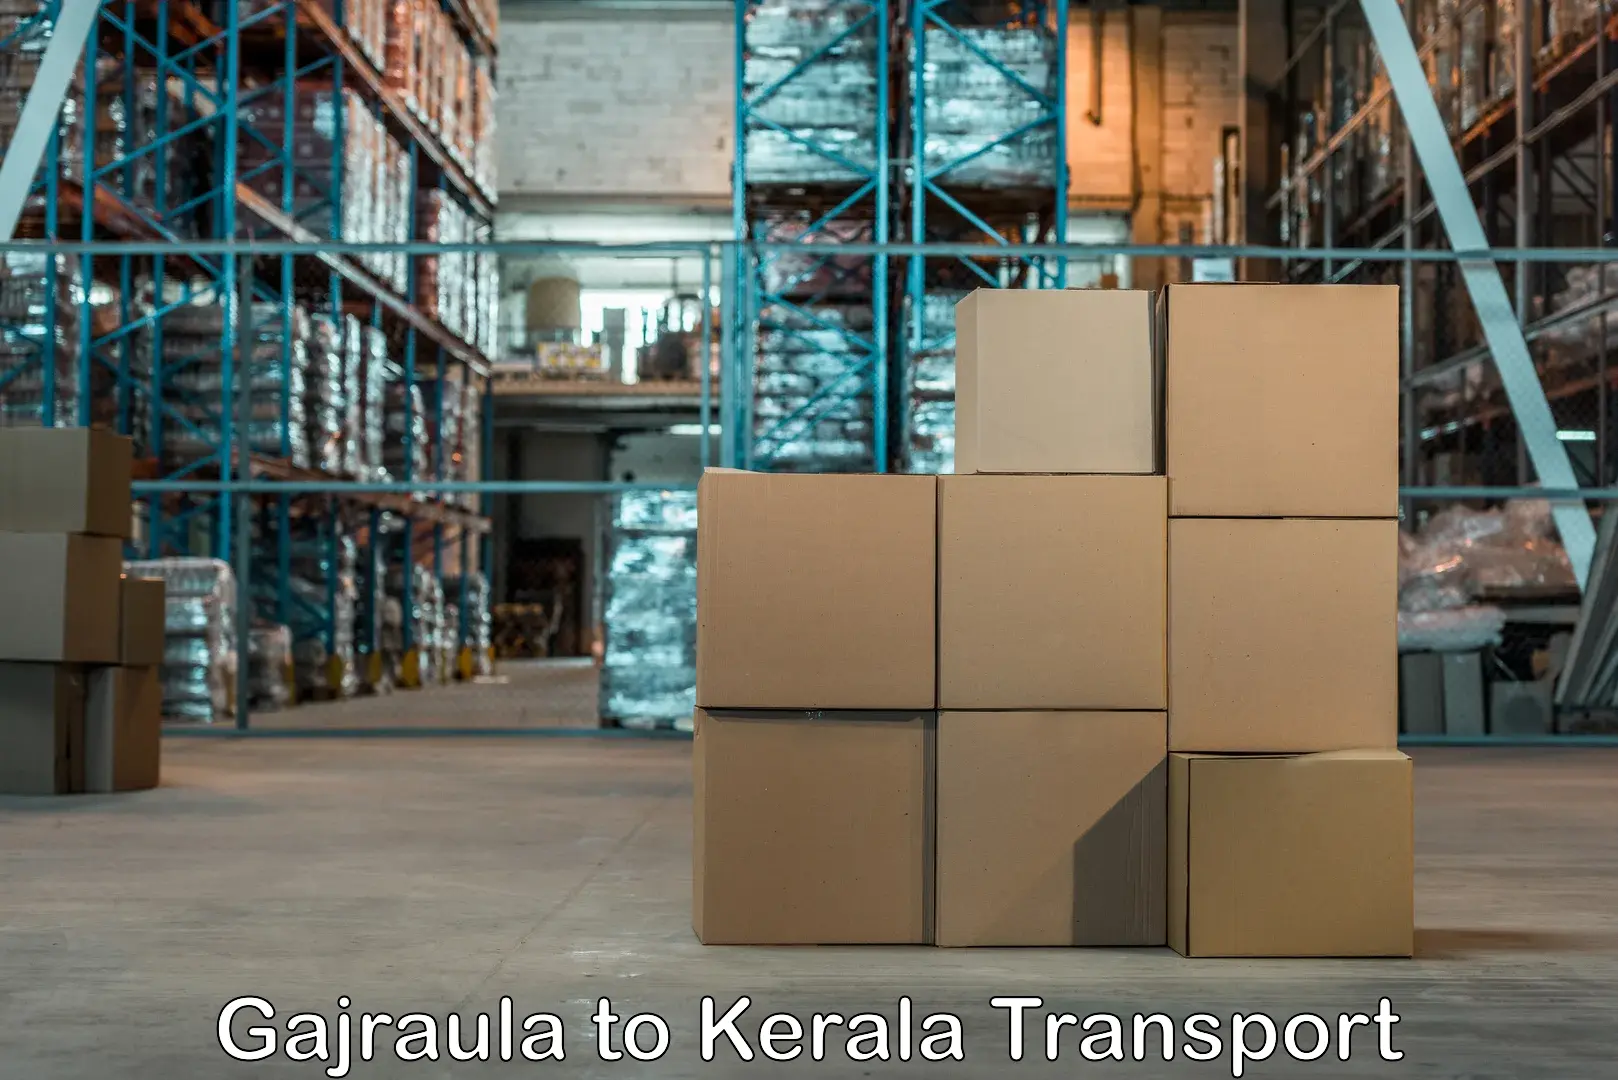 Truck transport companies in India Gajraula to Kochi